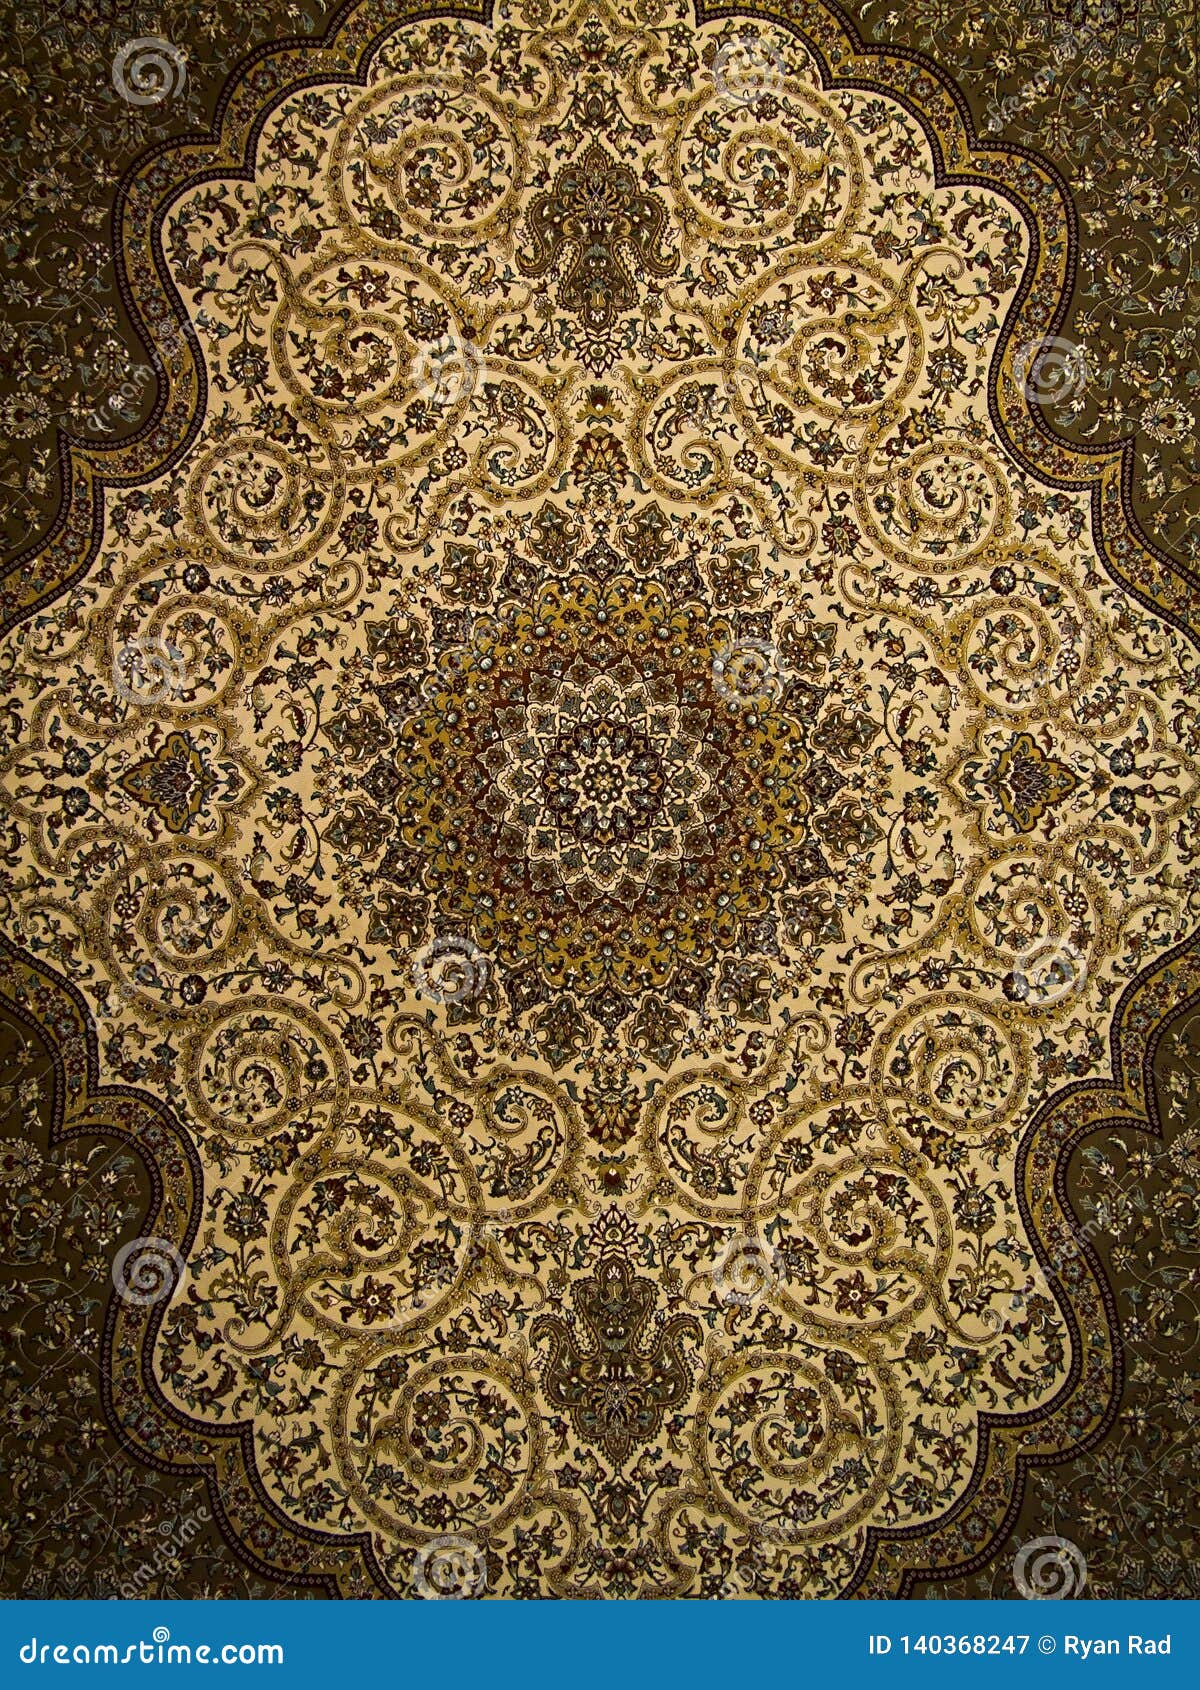 royal palace persian carpet pattern, persian carpet with an intricate 